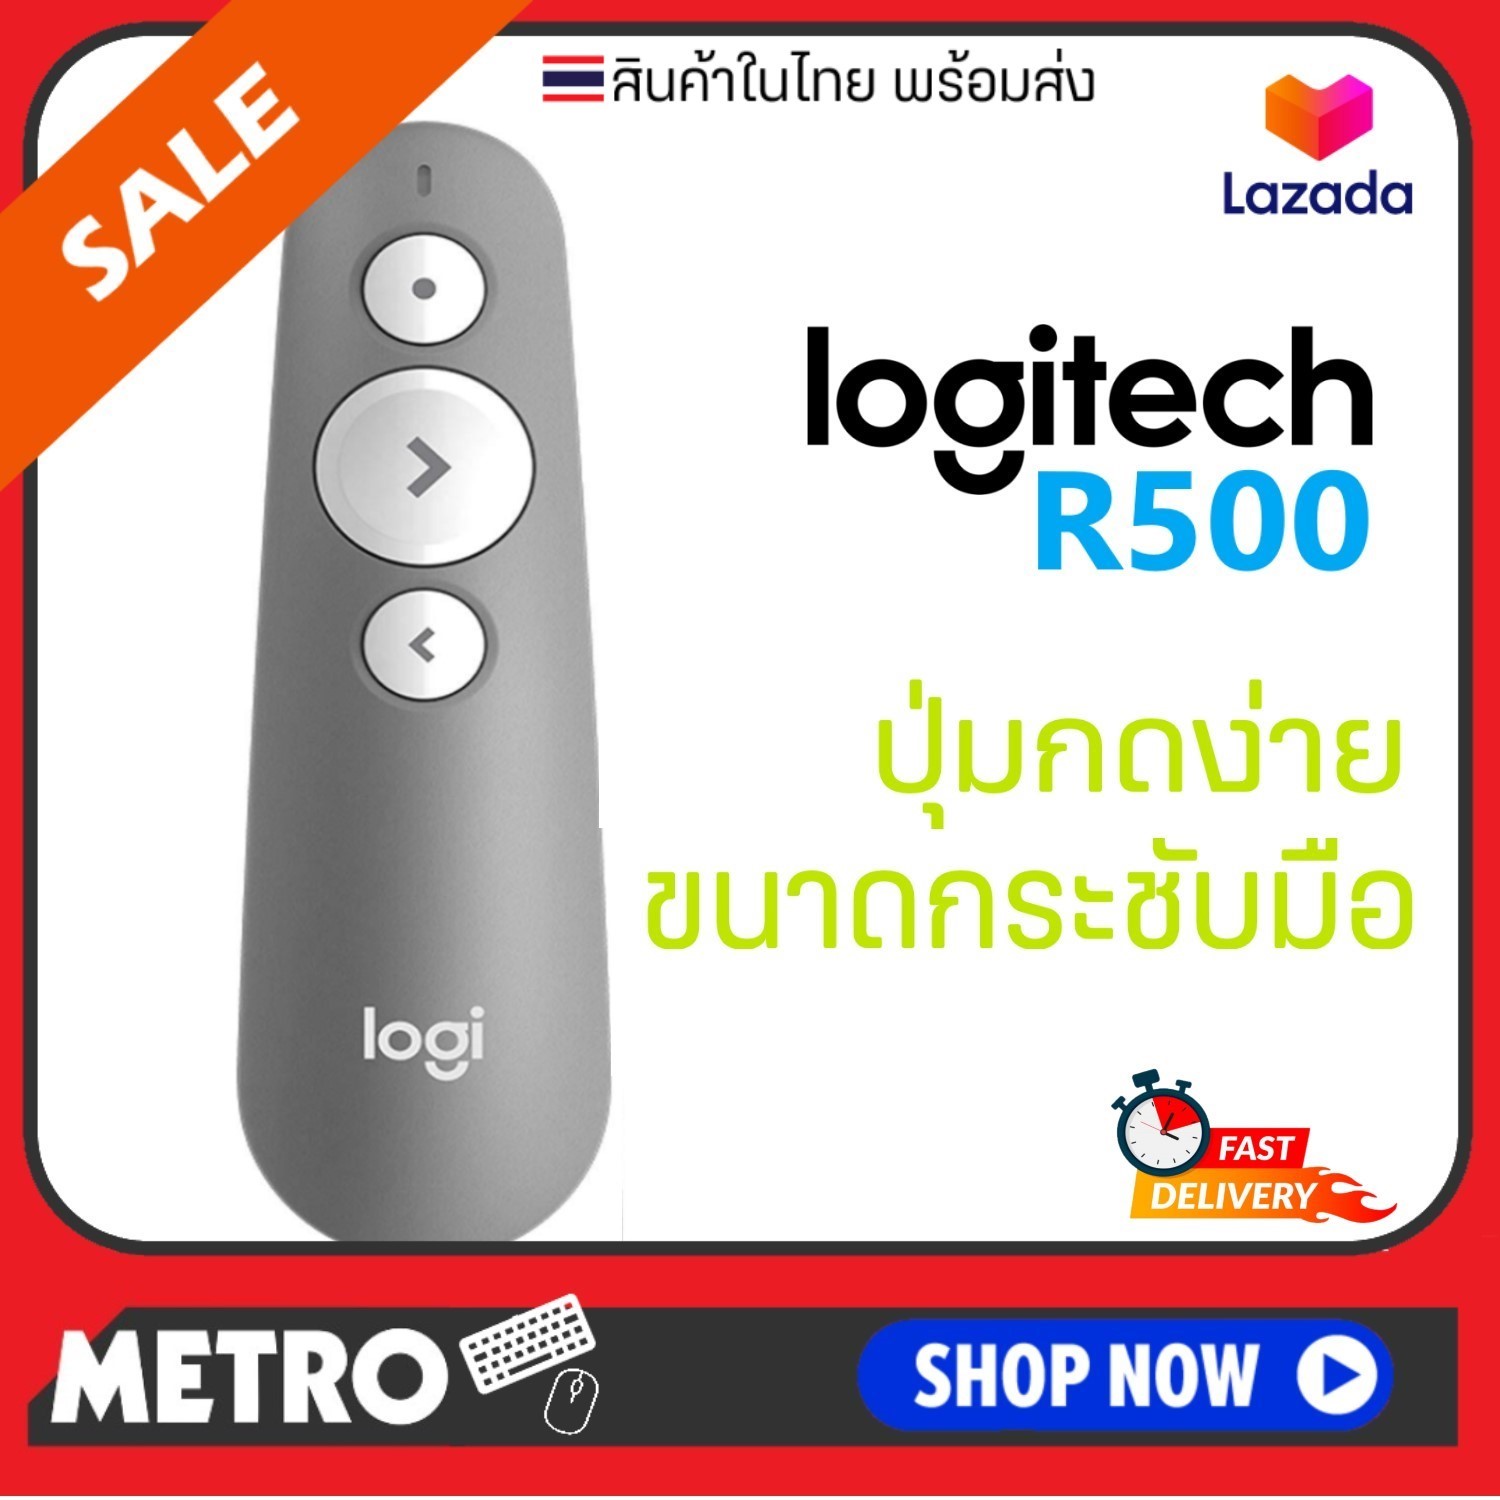 Logitech R500 Laser Presentation Remote with Dual Connectivity Bluetooth or USB for PowerPoint, Keynote, Google Slides, Prezi - Graphite (สีดำ/ เทา) ประกันศูนย์ 1ปี ของแท้